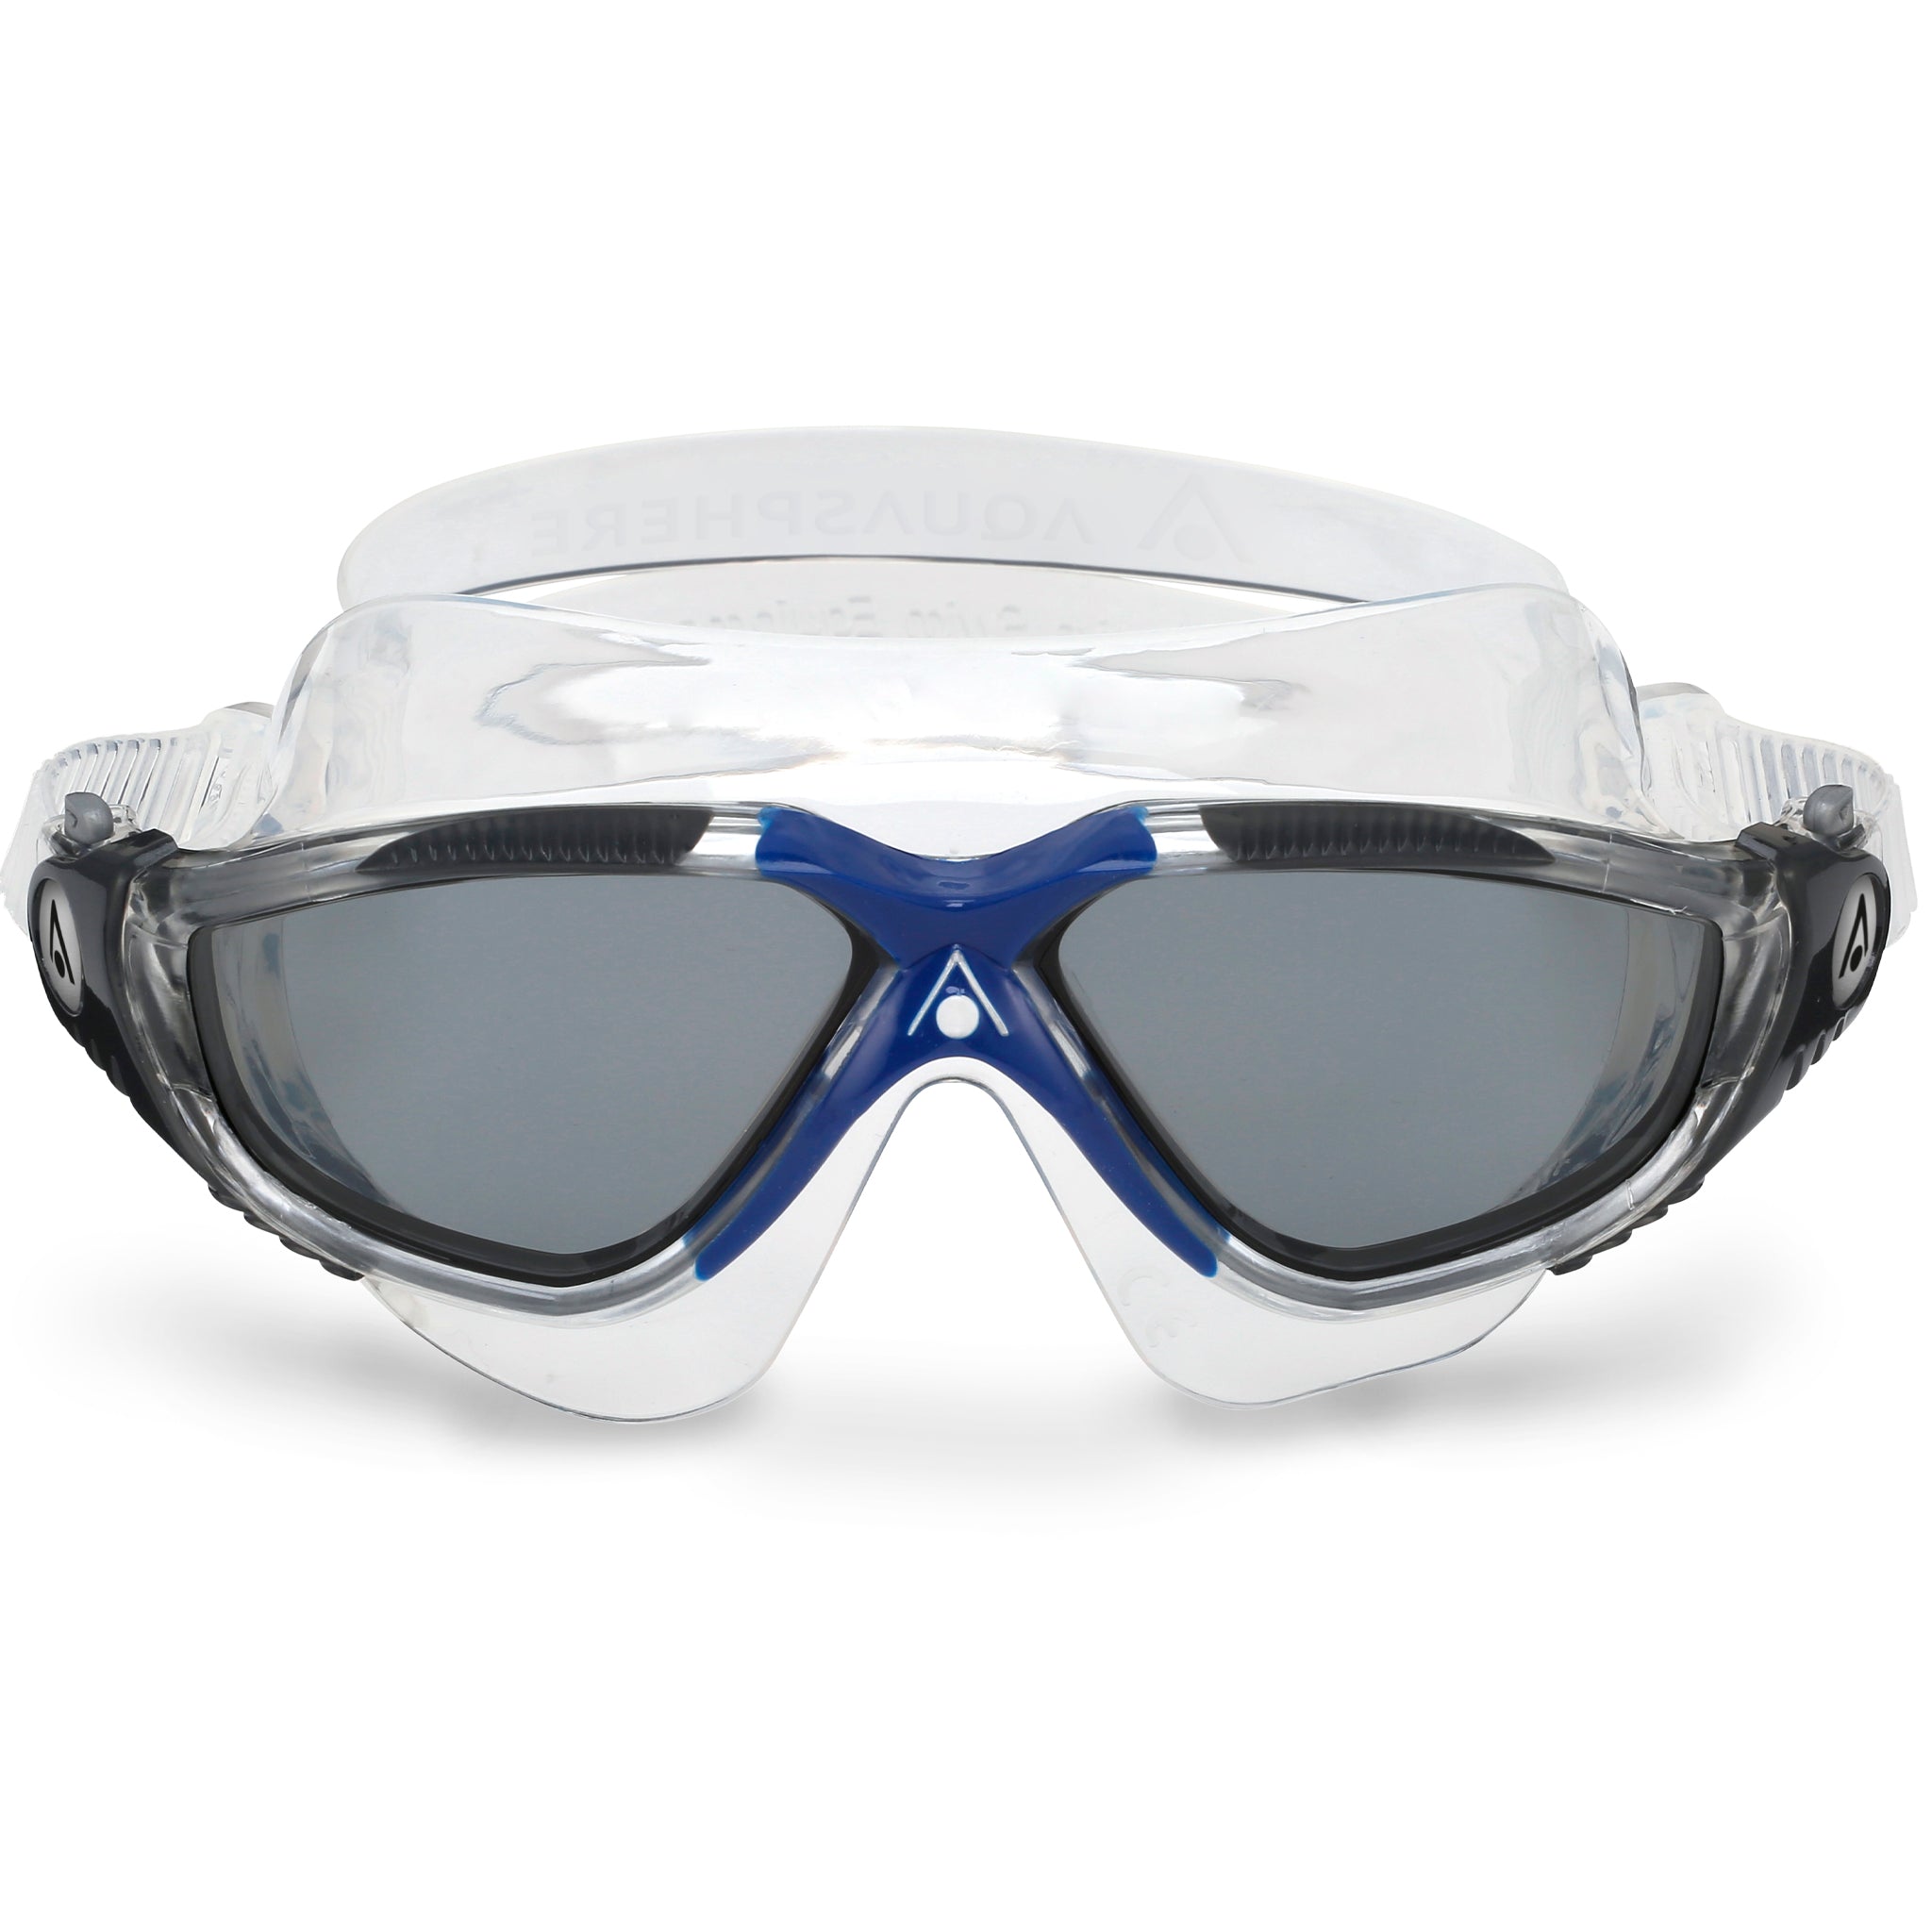 Aquasphere Vista Swimming Goggles Mask Smoke Tinted Lenses | Transparent/Dark Grey Front